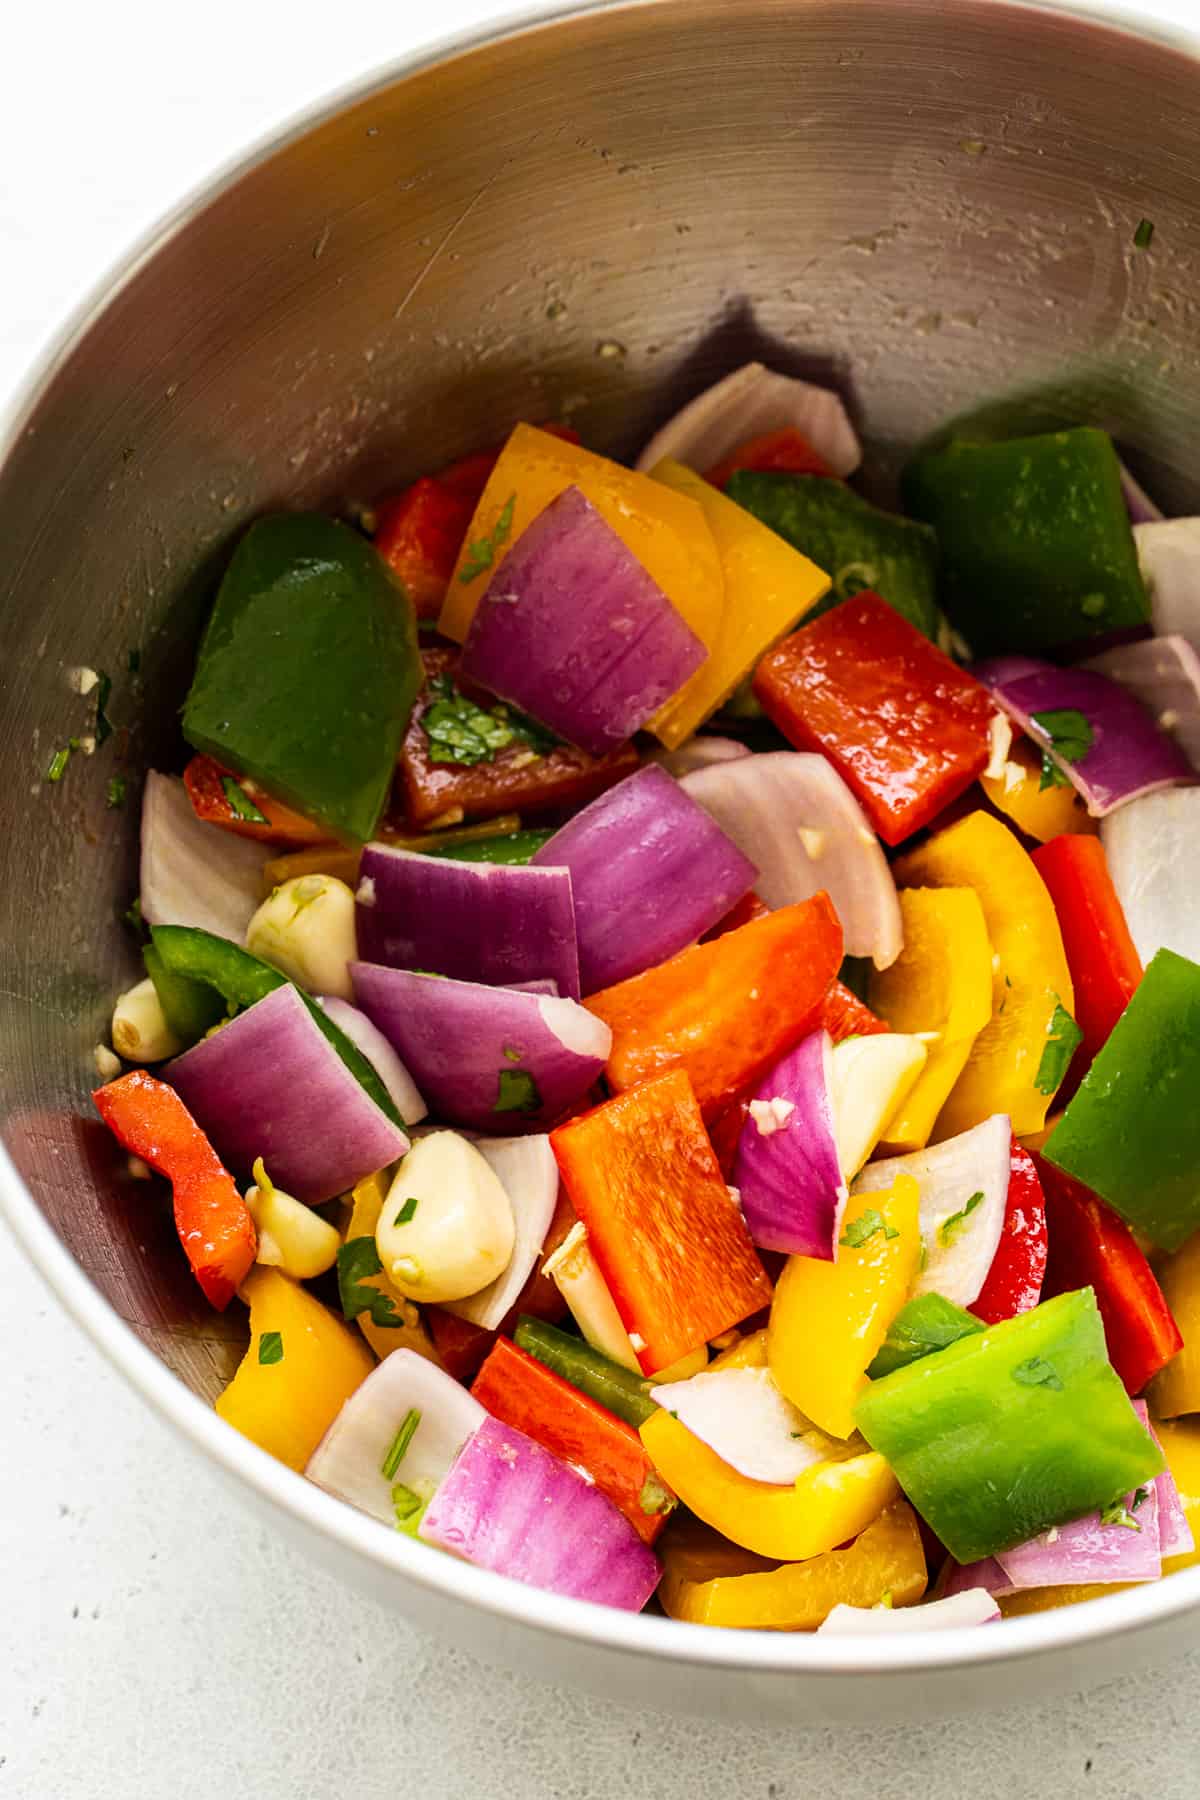 Rainbow veggies marinating in a bowl.